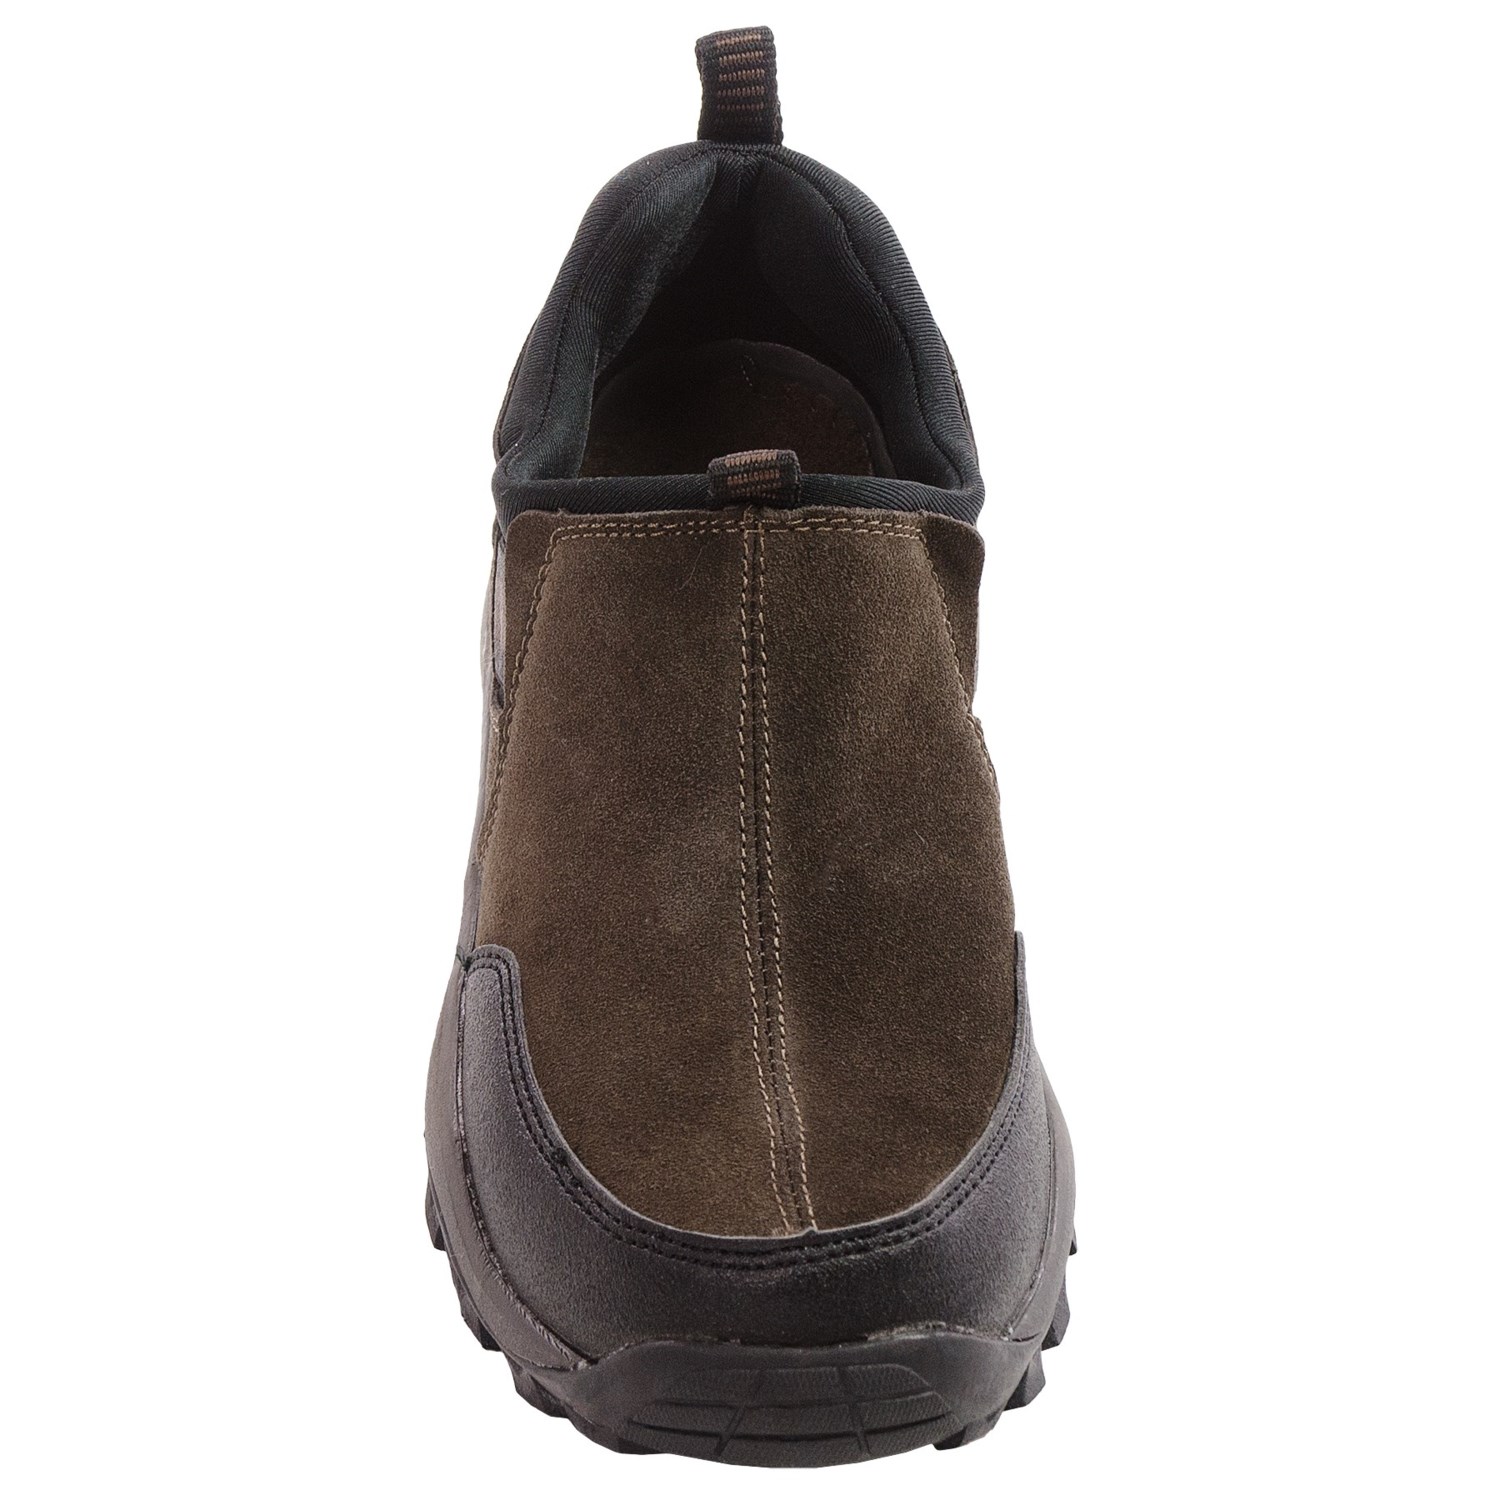 Khombu Tamarack Shoes (For Men) - Save 36%